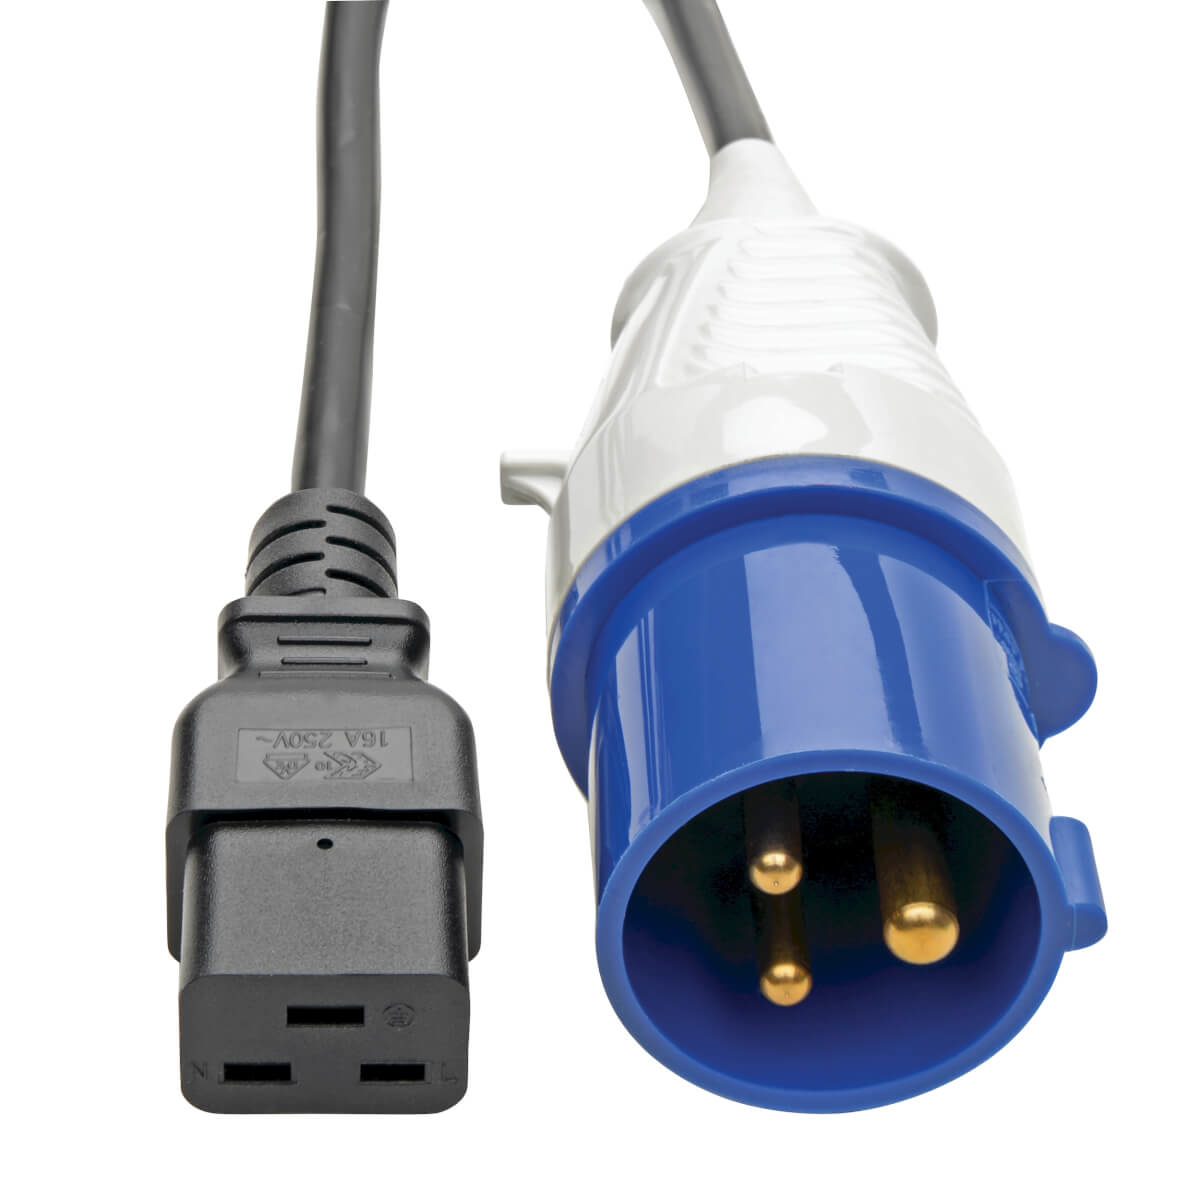 Photos - Cable (video, audio, USB) TrippLite Tripp Lite P070-010 IEC 309 to C19, Heavy-Duty Extension Cord - 16A, 2 